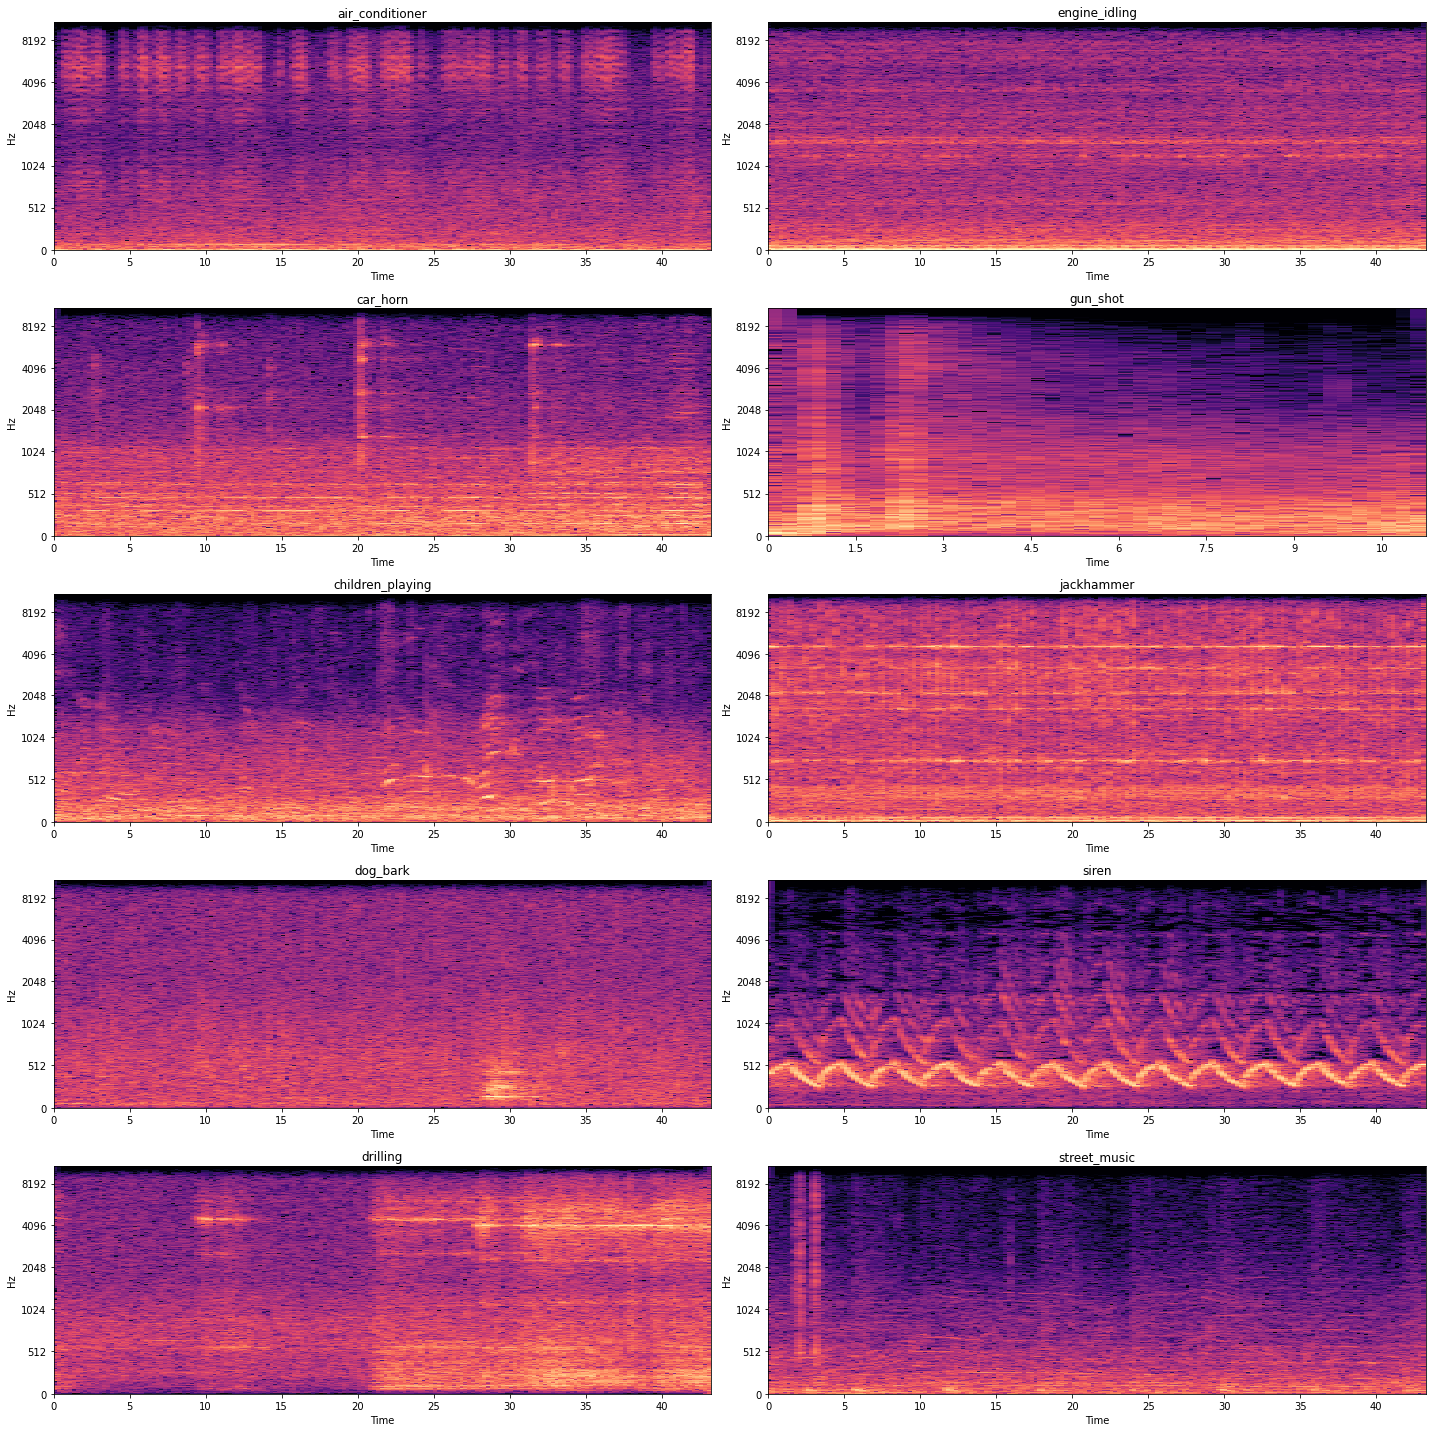 Mel spectrogram of audio files|Audio 